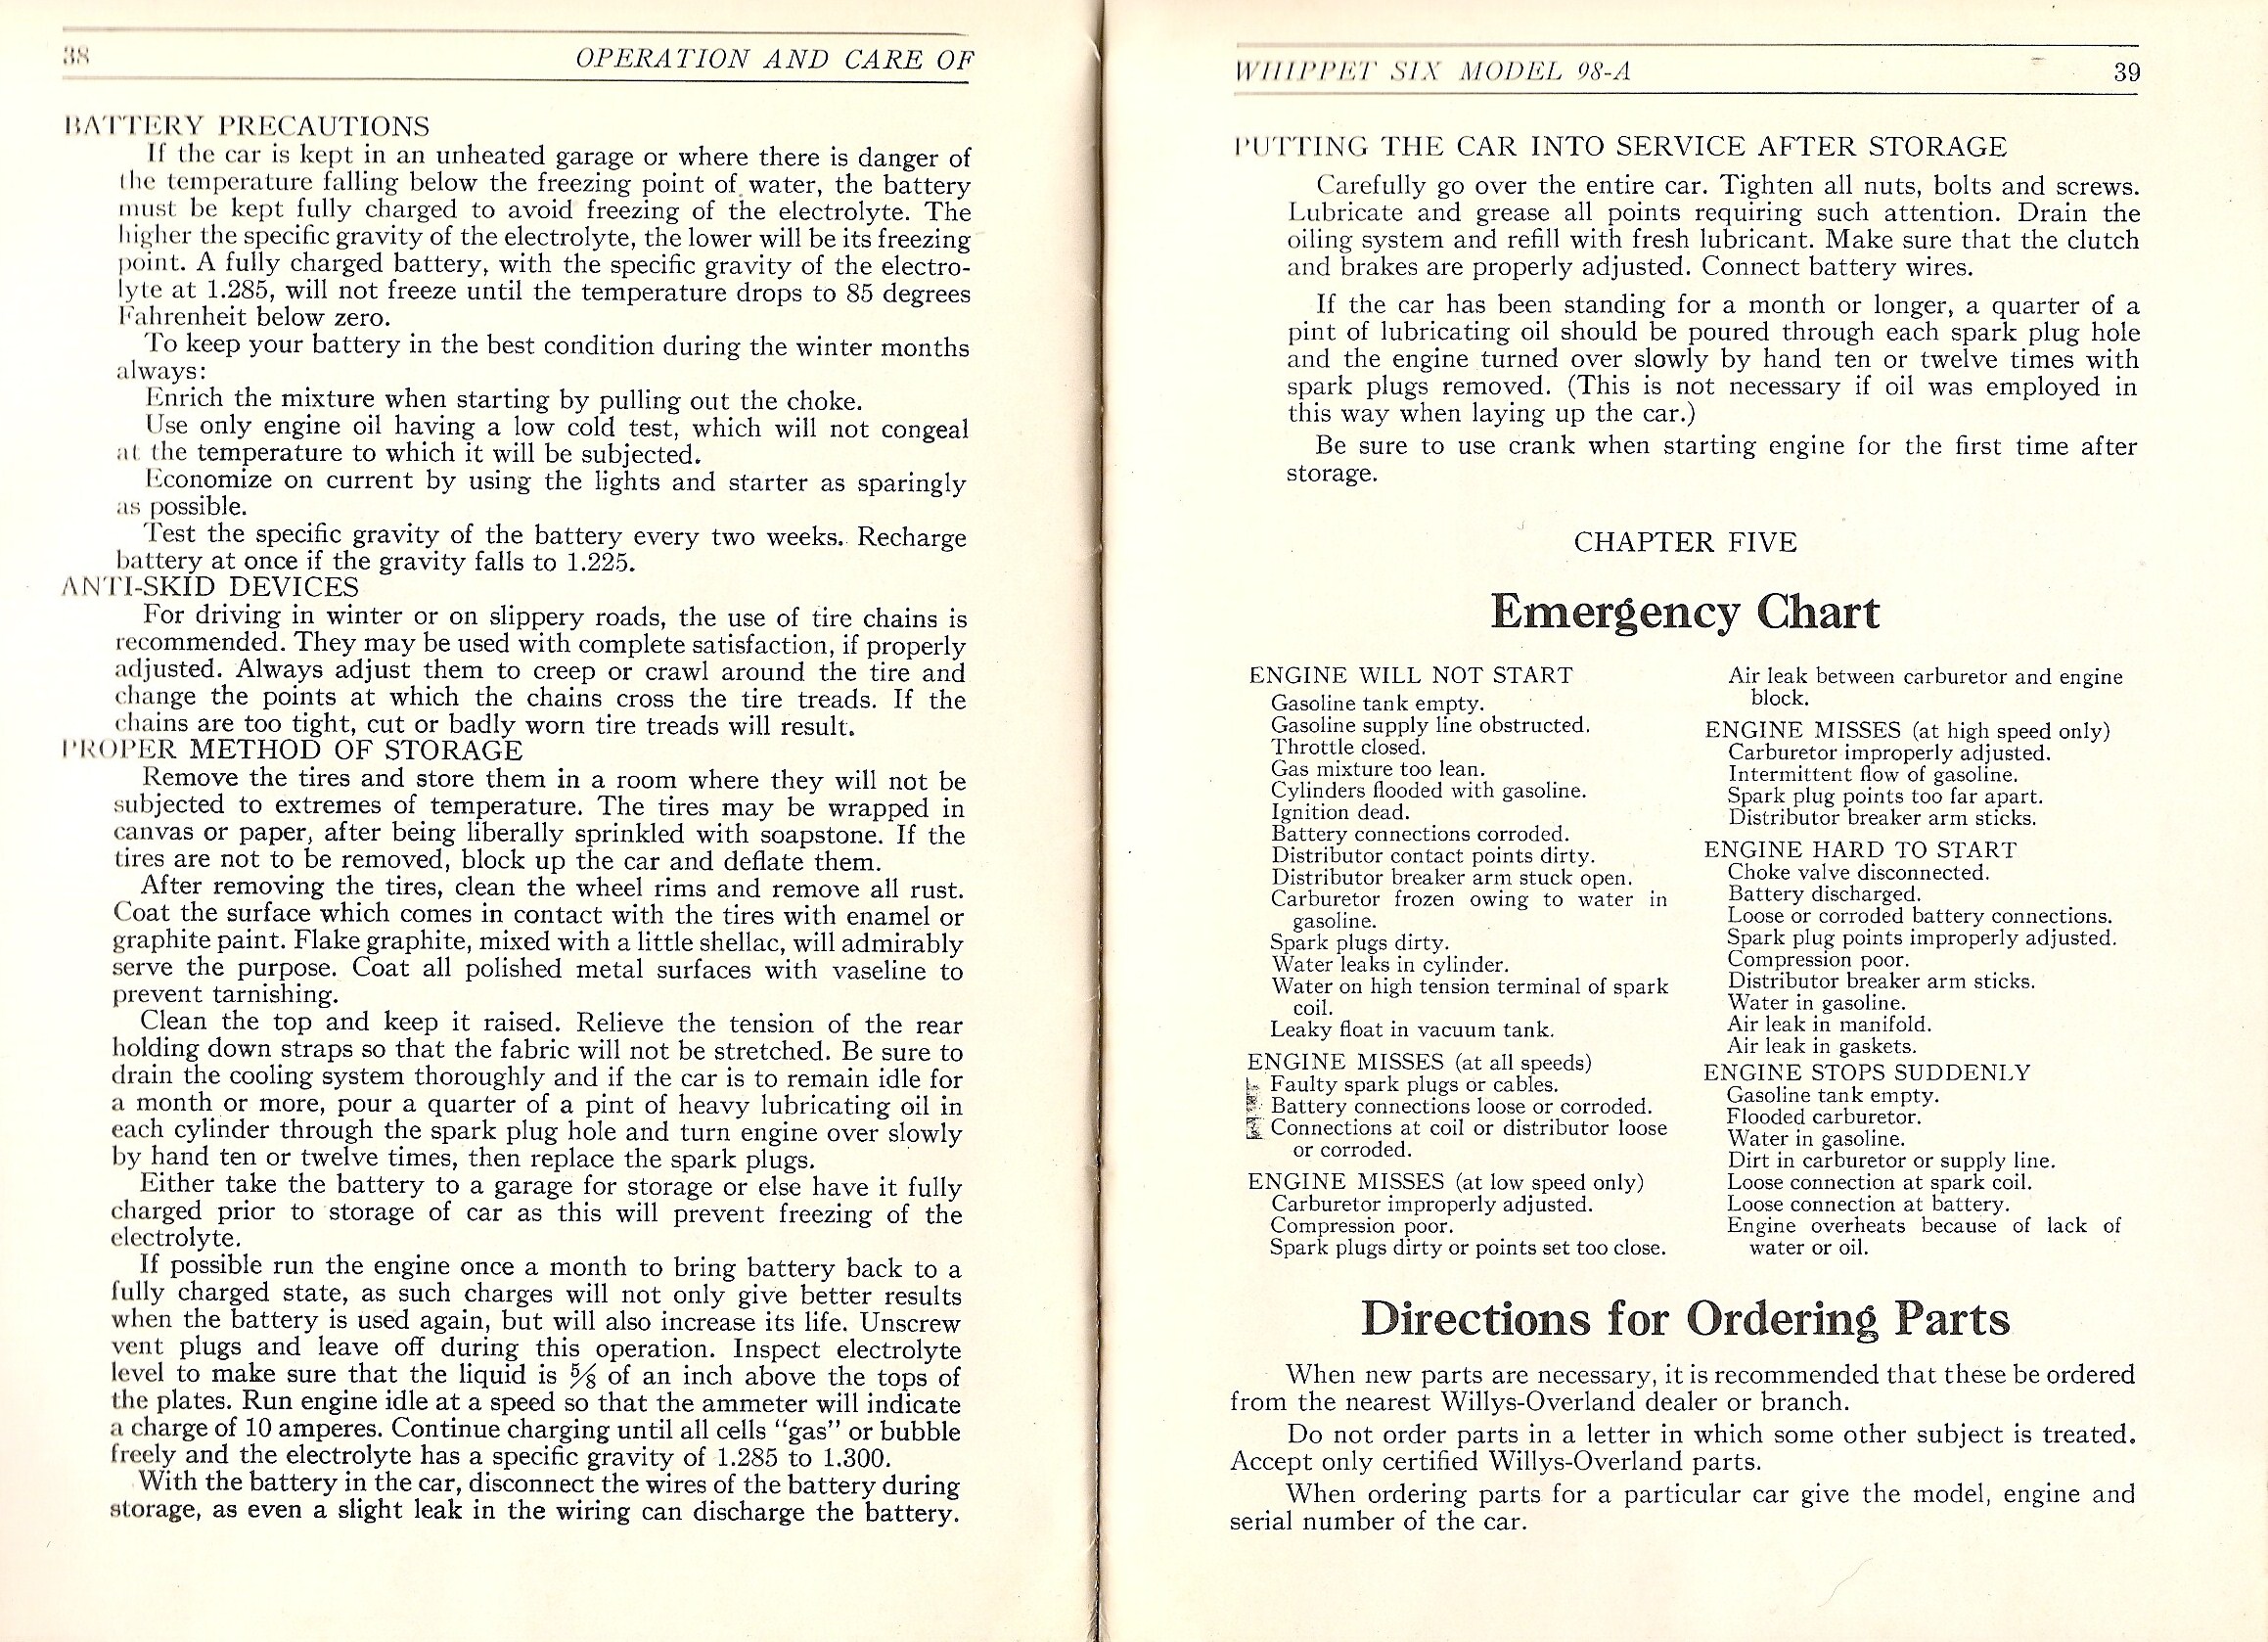 1929_Whippet_Six_Operation_Manual-38-39